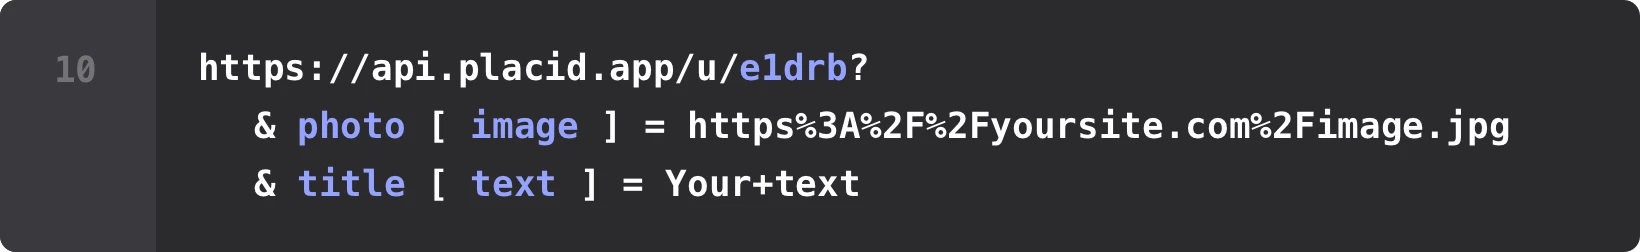 Placid URL API example